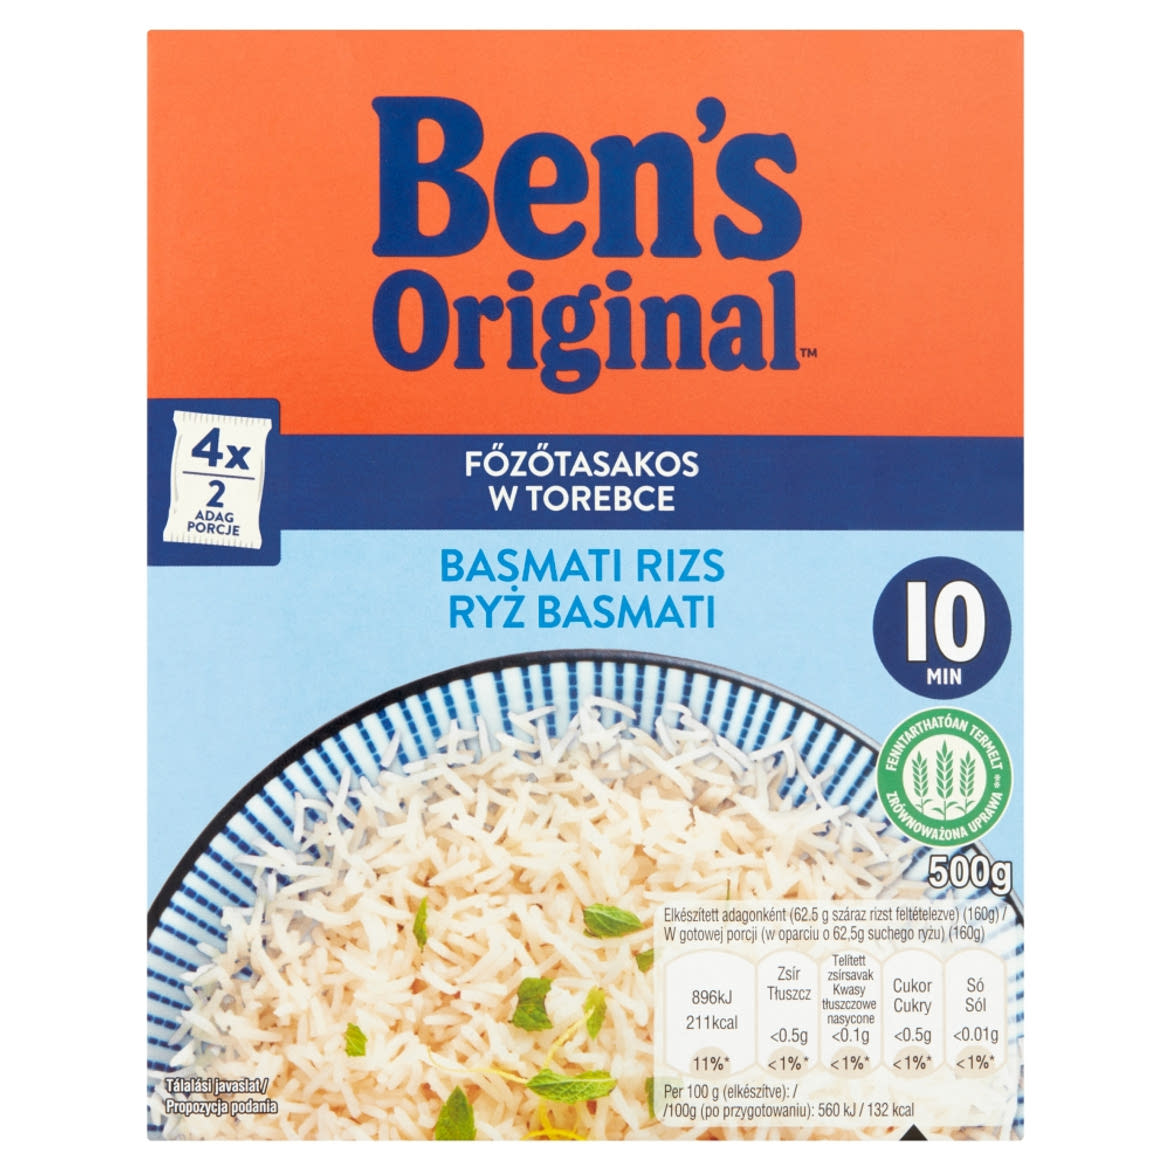 Ben's Original főzötasakos basmati rizs 500 g